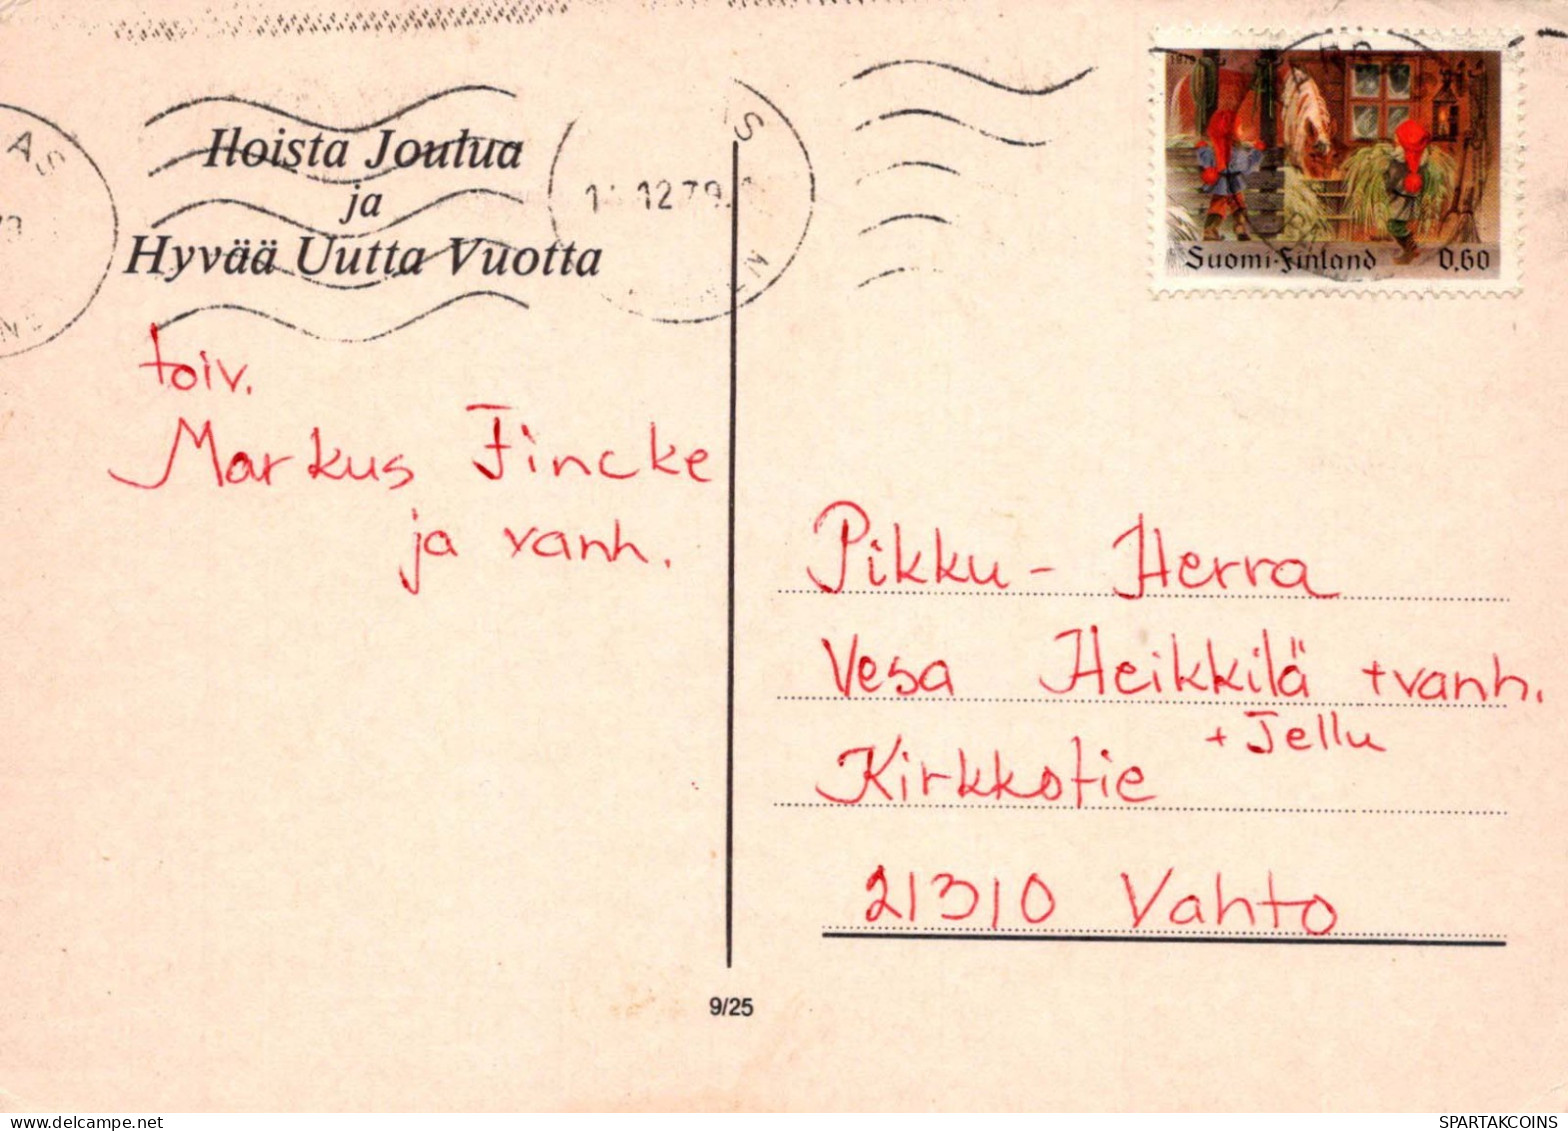 PAPÁ NOEL Feliz Año Navidad GNOMO Vintage Tarjeta Postal CPSM #PBL924.A - Santa Claus